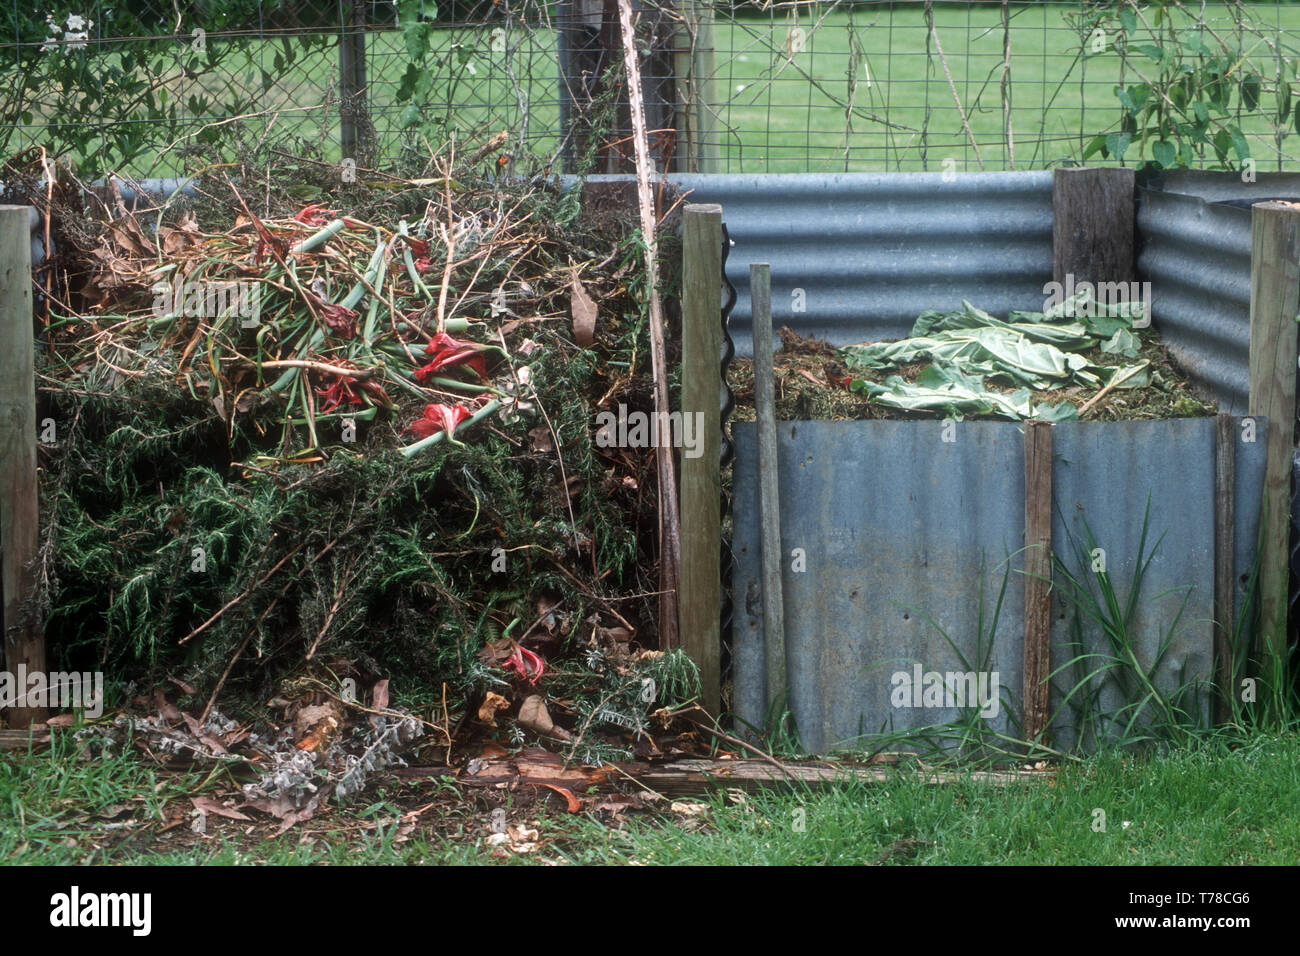 https://c8.alamy.com/comp/T78CG6/home-made-backyard-compost-bins-made-from-wood-and-corrugated-iron-australia-T78CG6.jpg